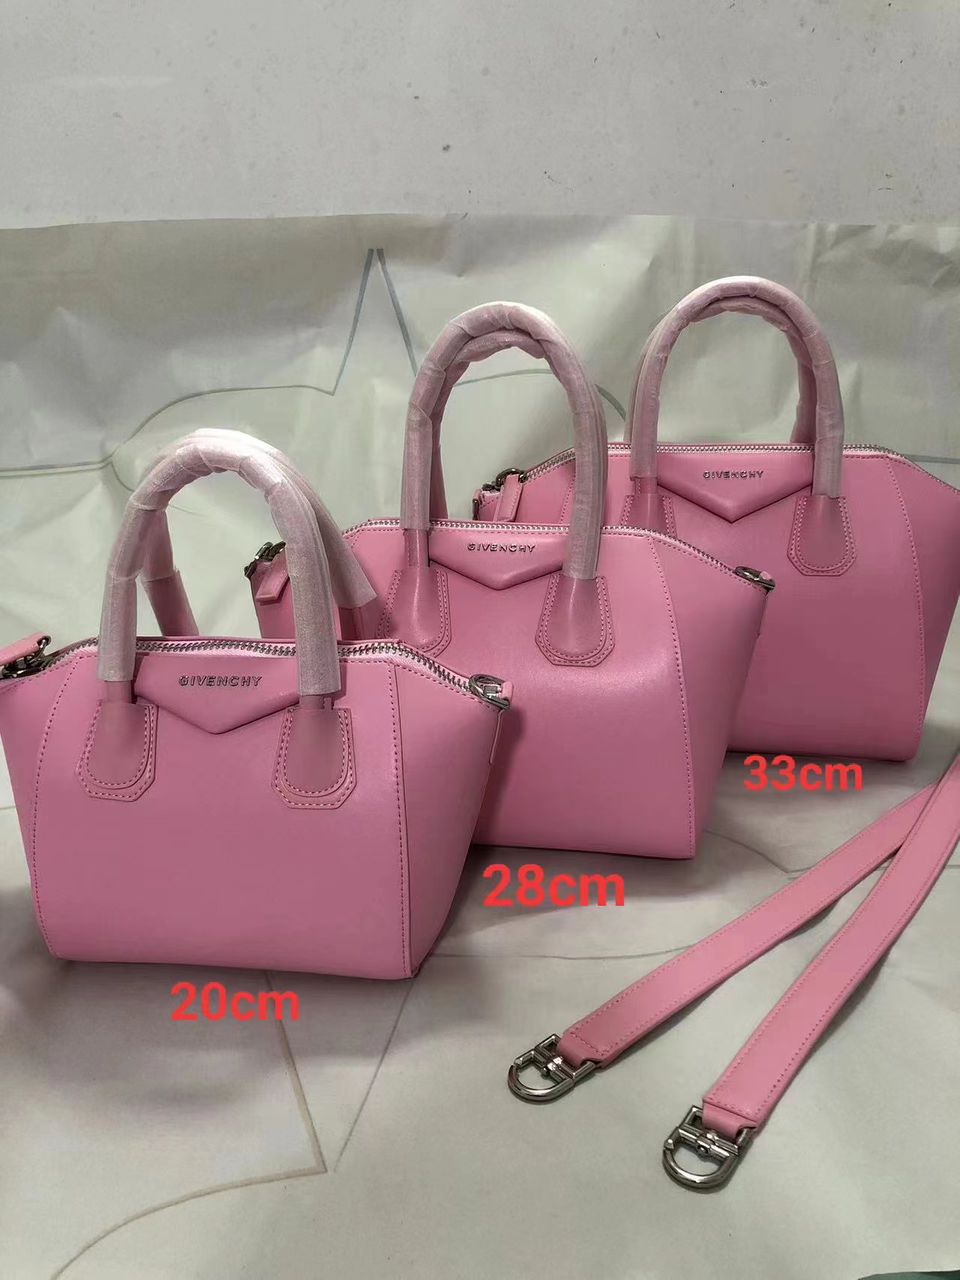 Given bag (20cm)